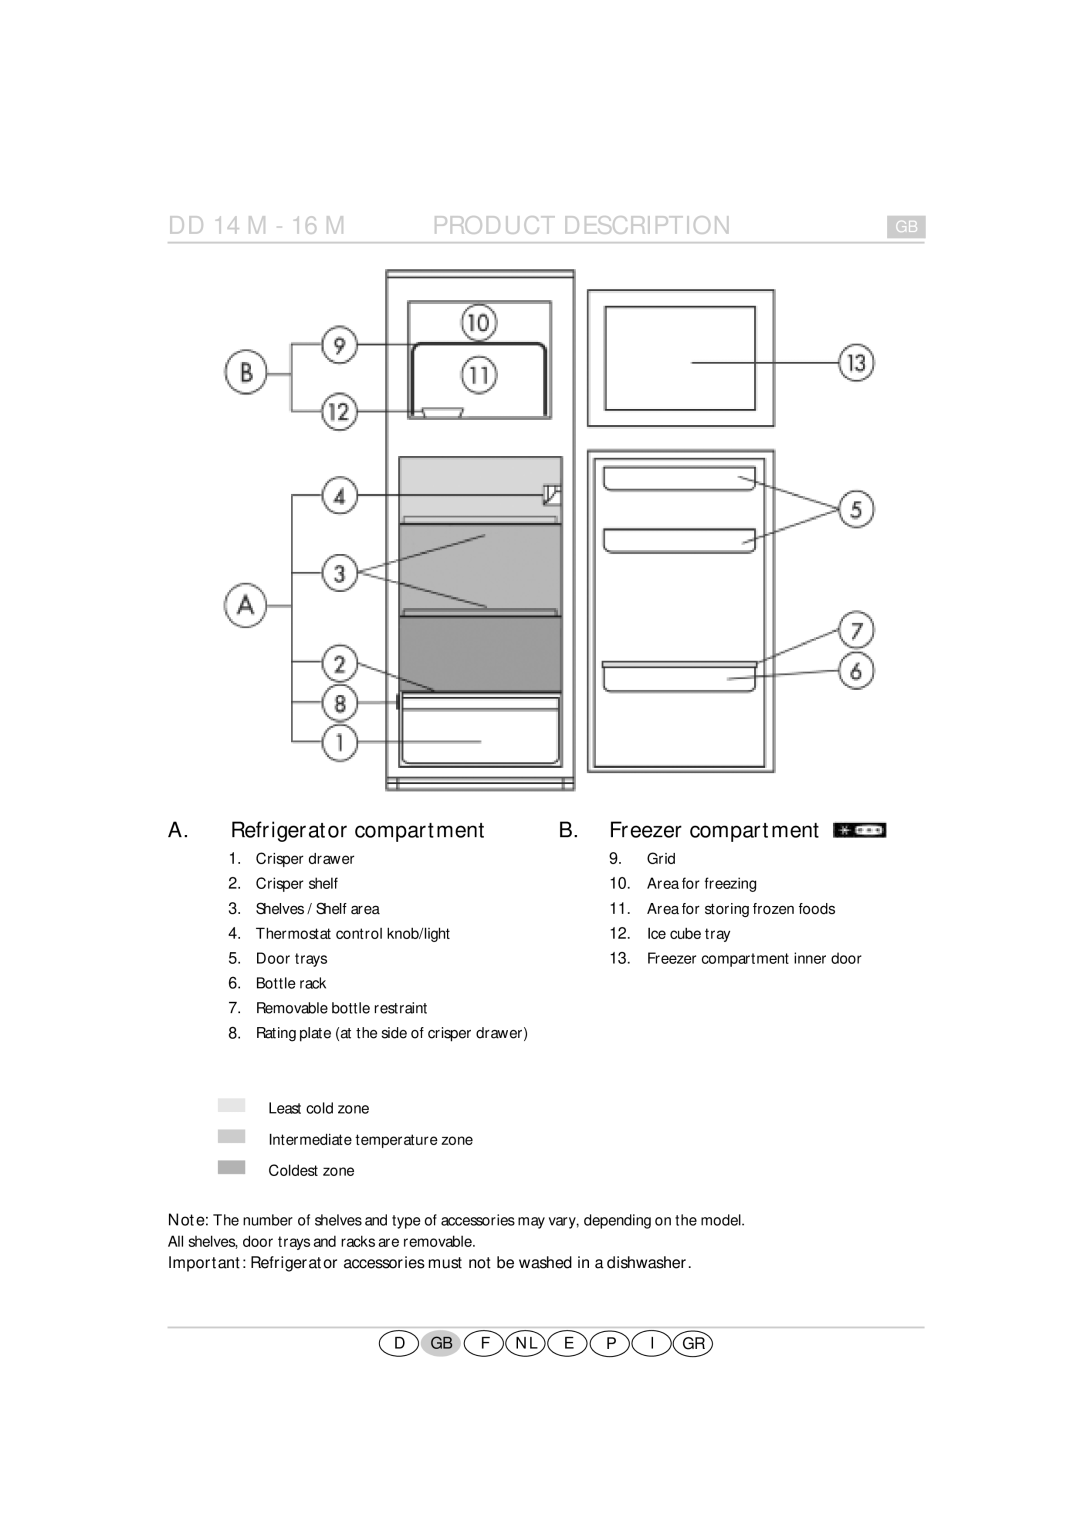 Smeg FR238A7 manual Refrigerator compartment, B. Freezer compartment, DD 14 M - 16 M PRODUCT DESCRIPTION 